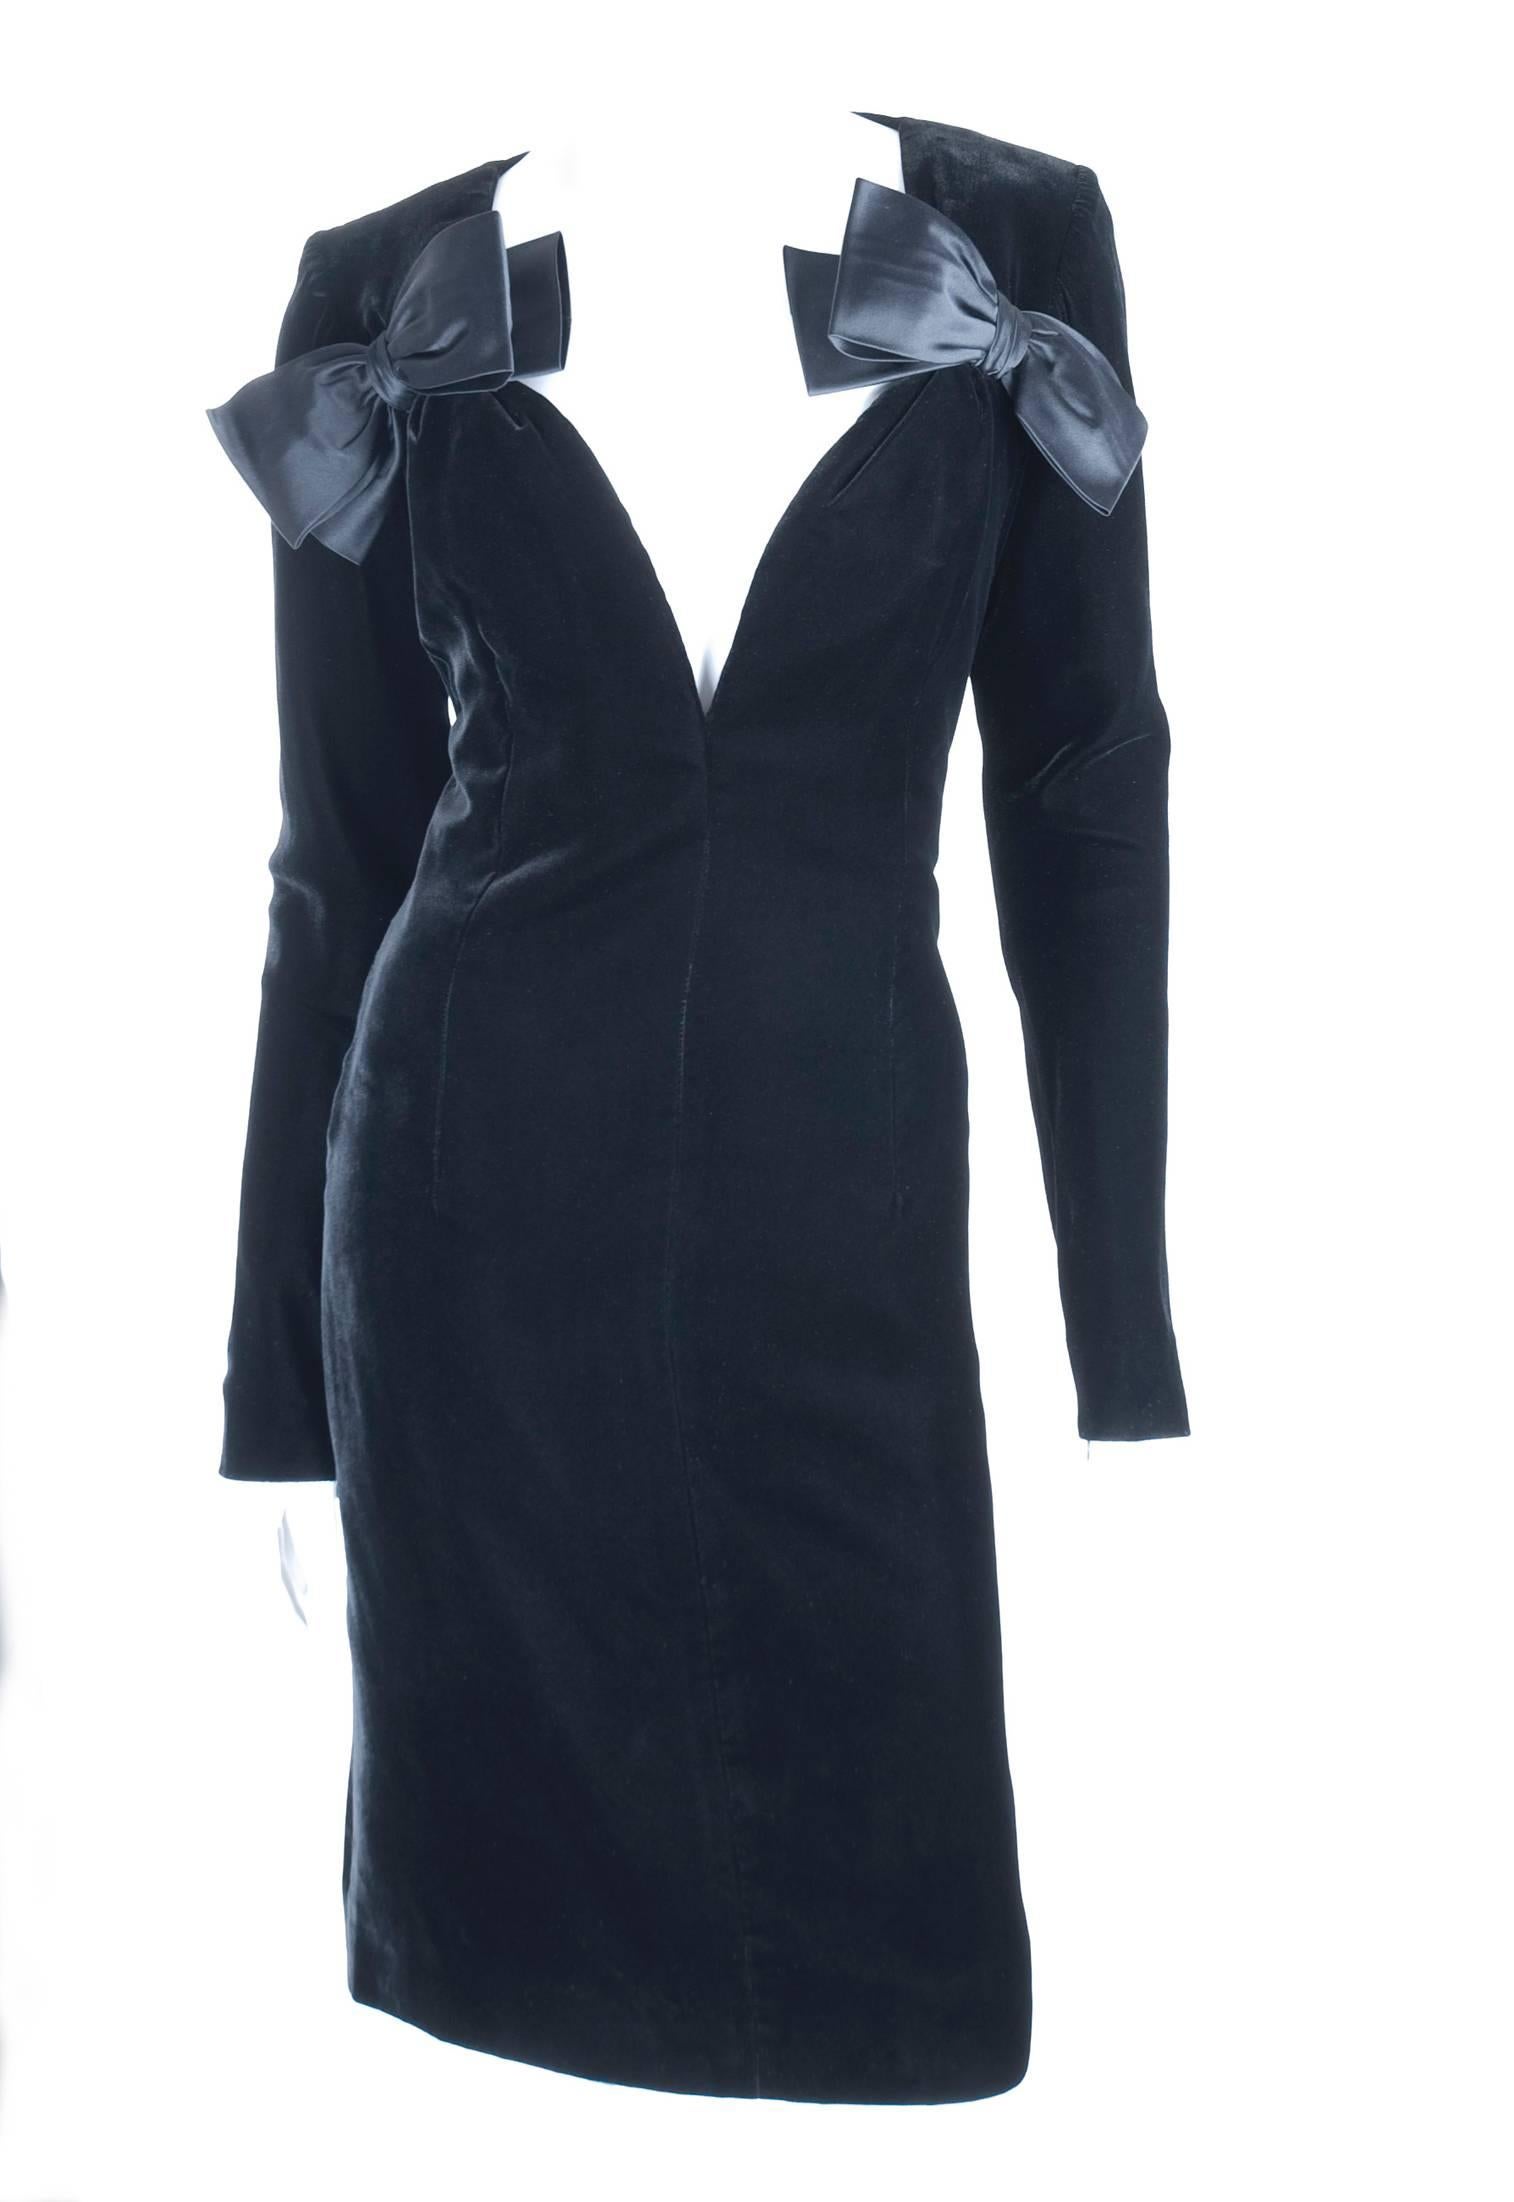 Vintage 80s Yves Saint Laurent Black Velvet Cocktail Dress In Excellent Condition For Sale In Hamburg, Deutschland